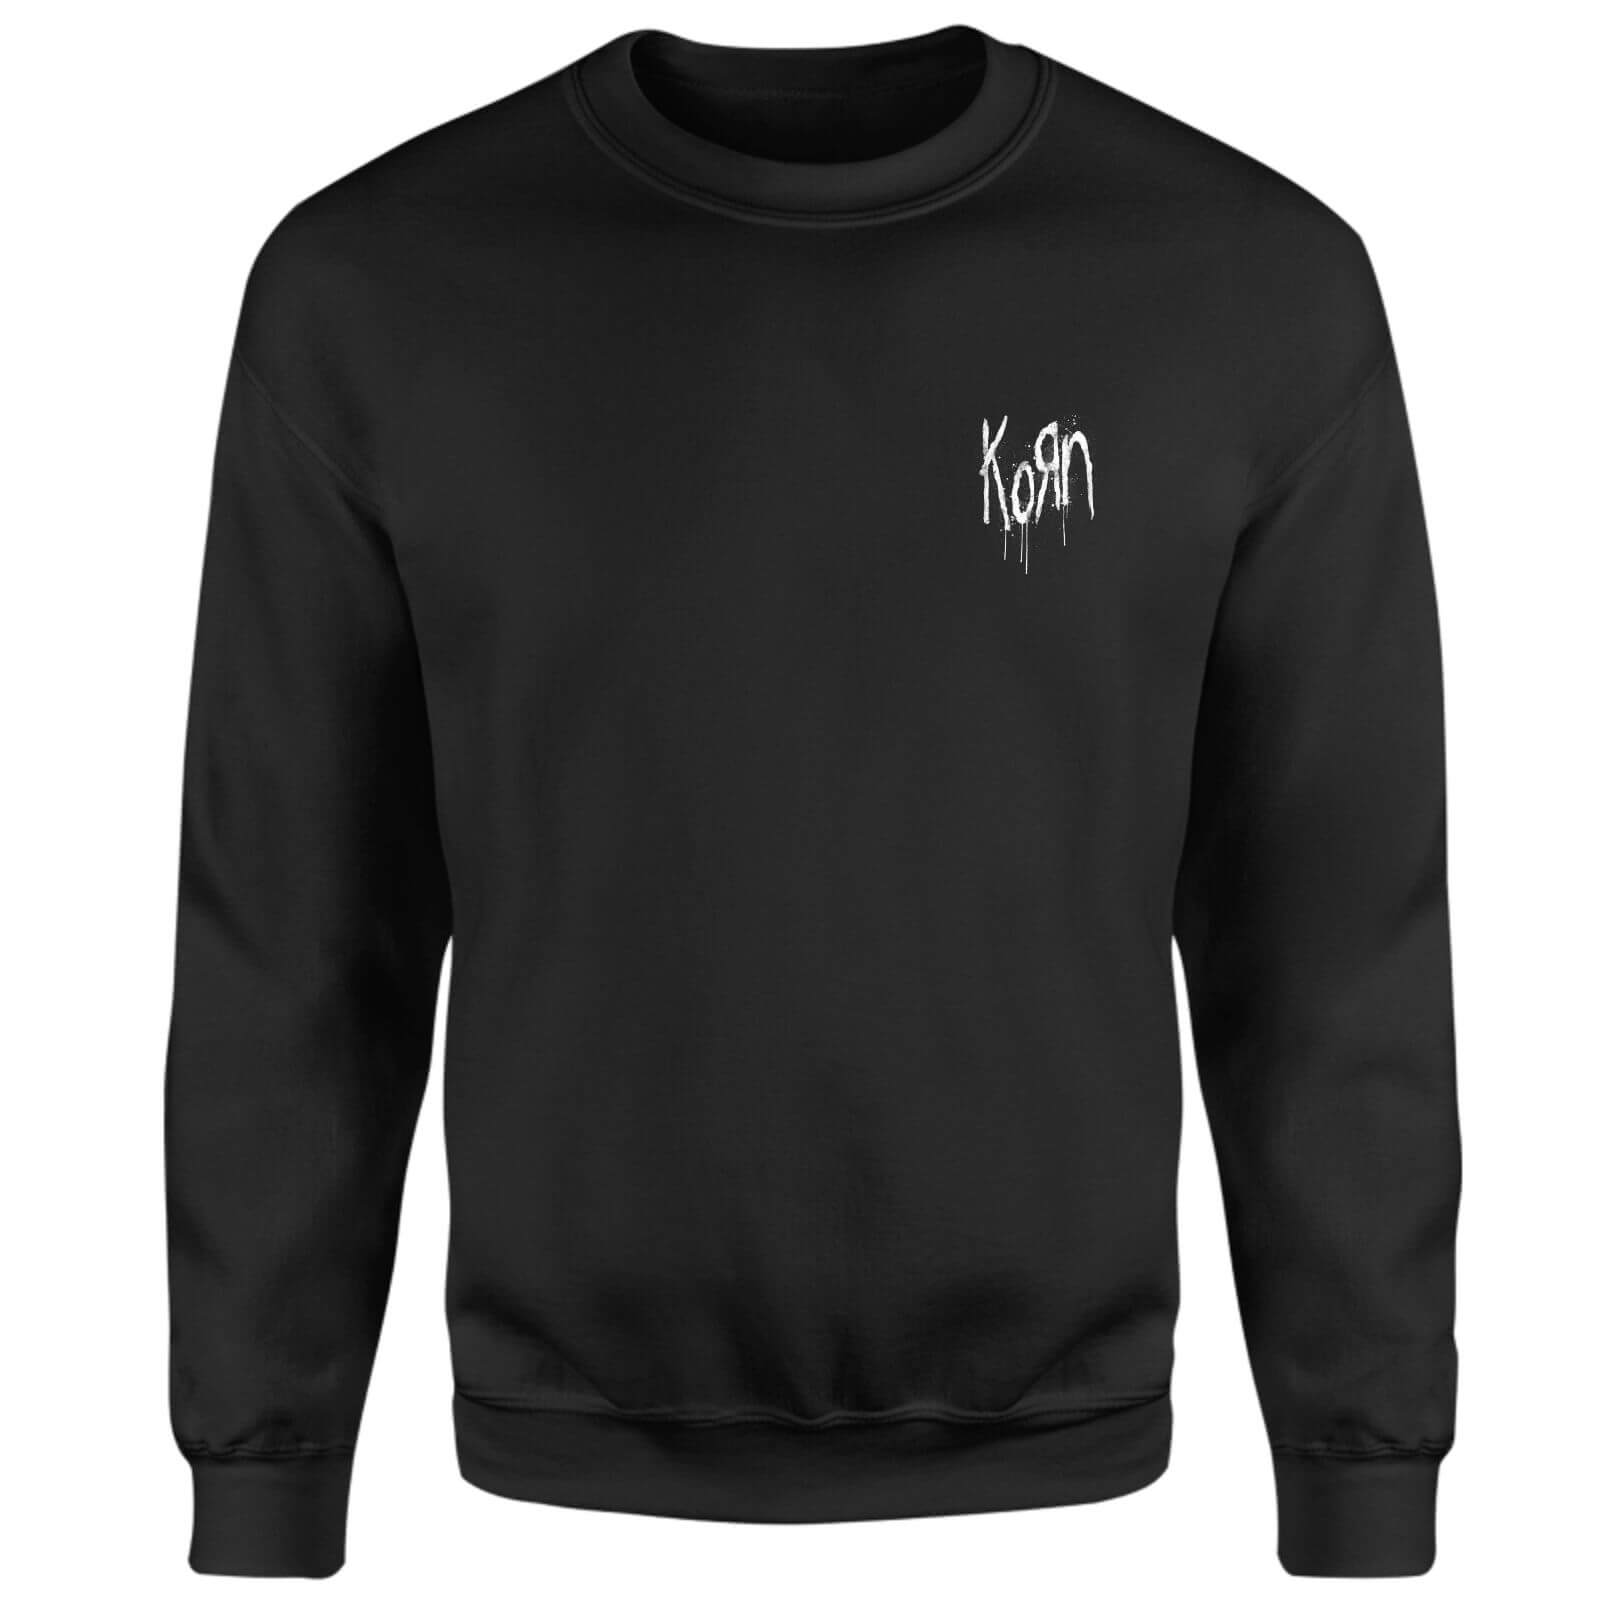 Korn Splatter Stamp Sweatshirt - Black - XS